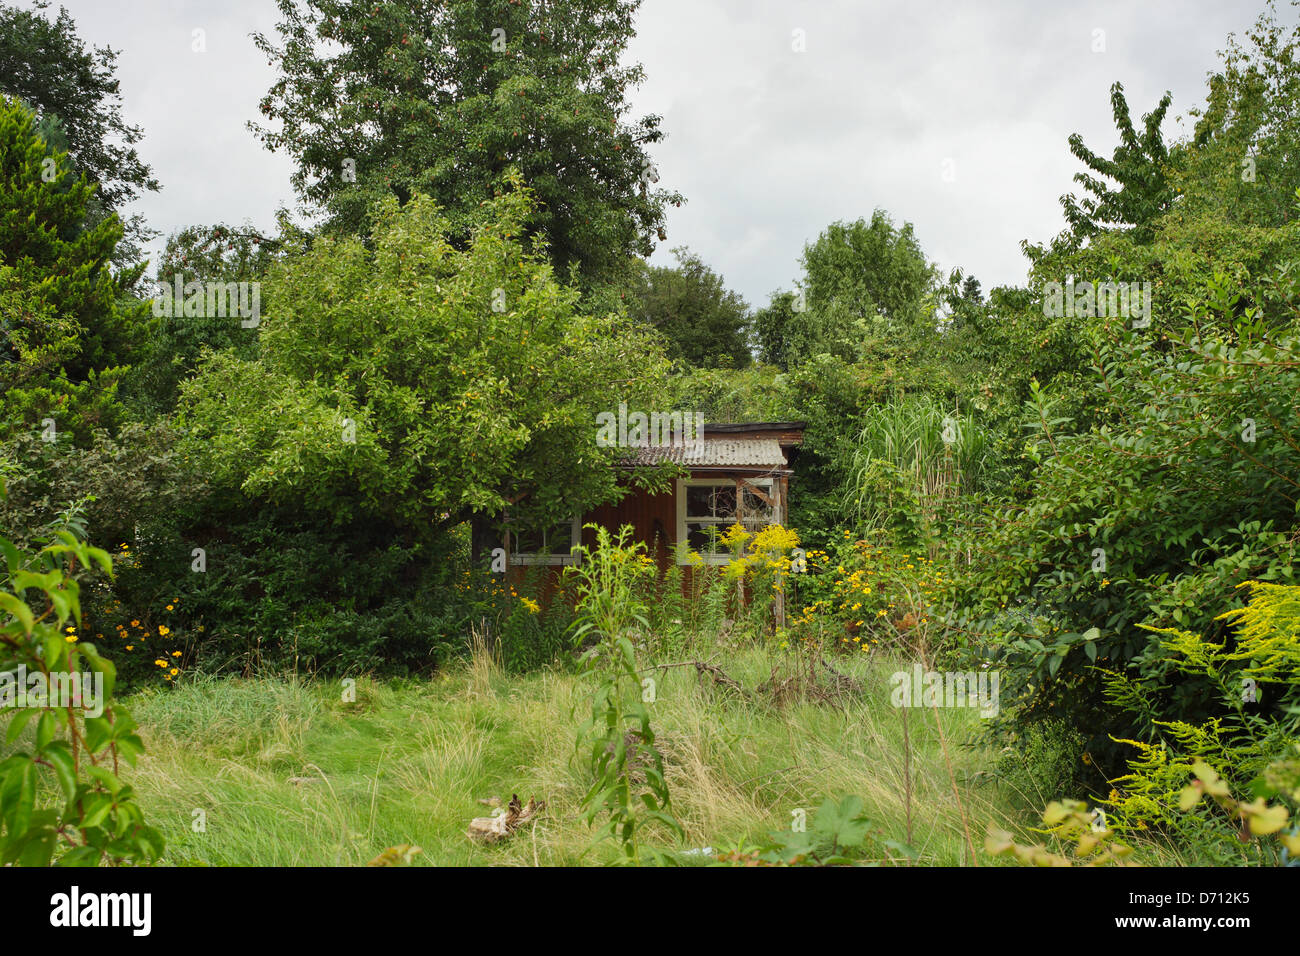 Berlin, Germany, Wochenendhaeuschen abandoned in an overgrown garden Stock Photo